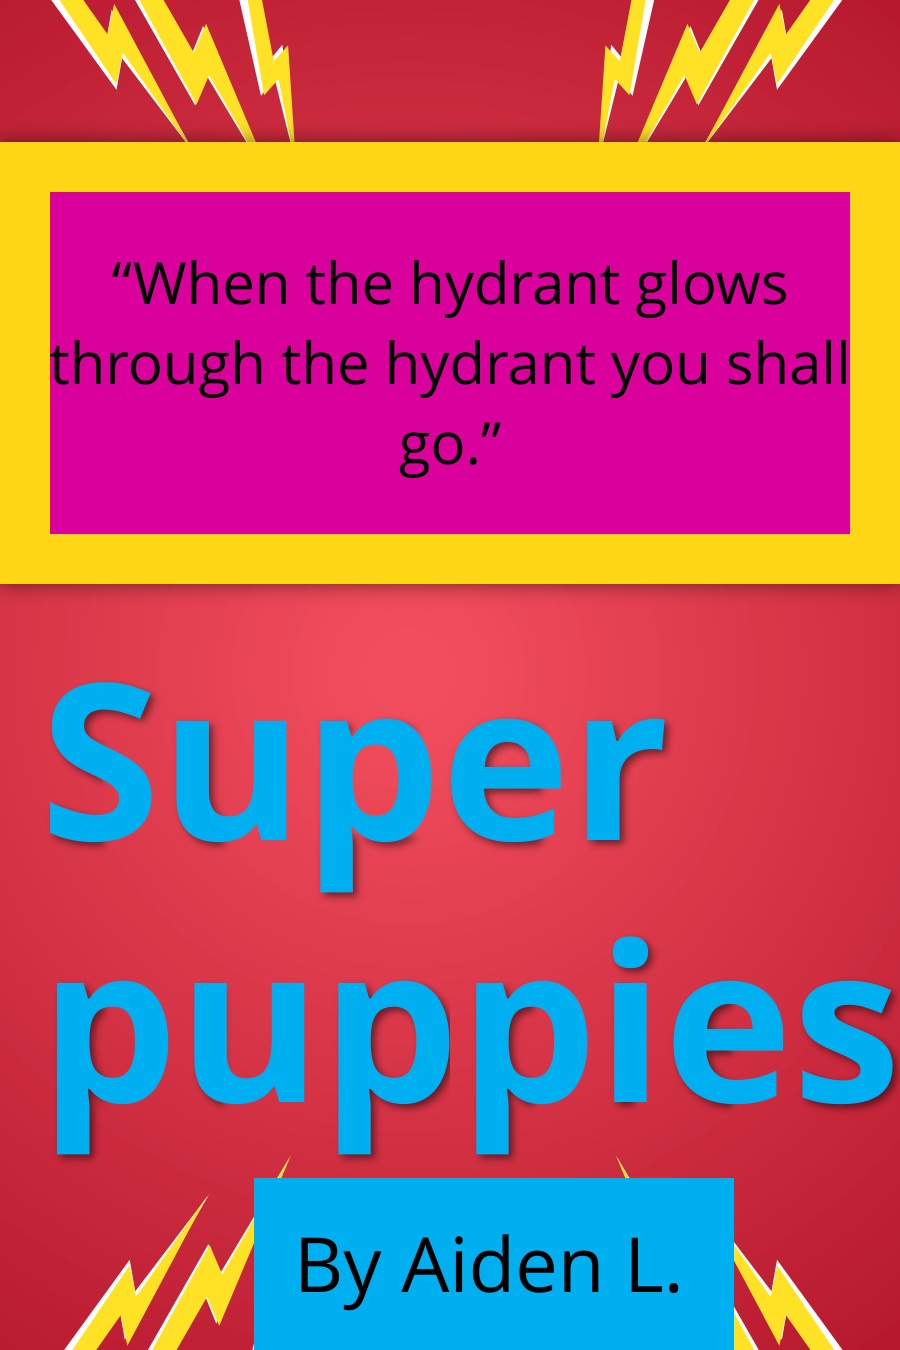 Super Puppies by Aiden L